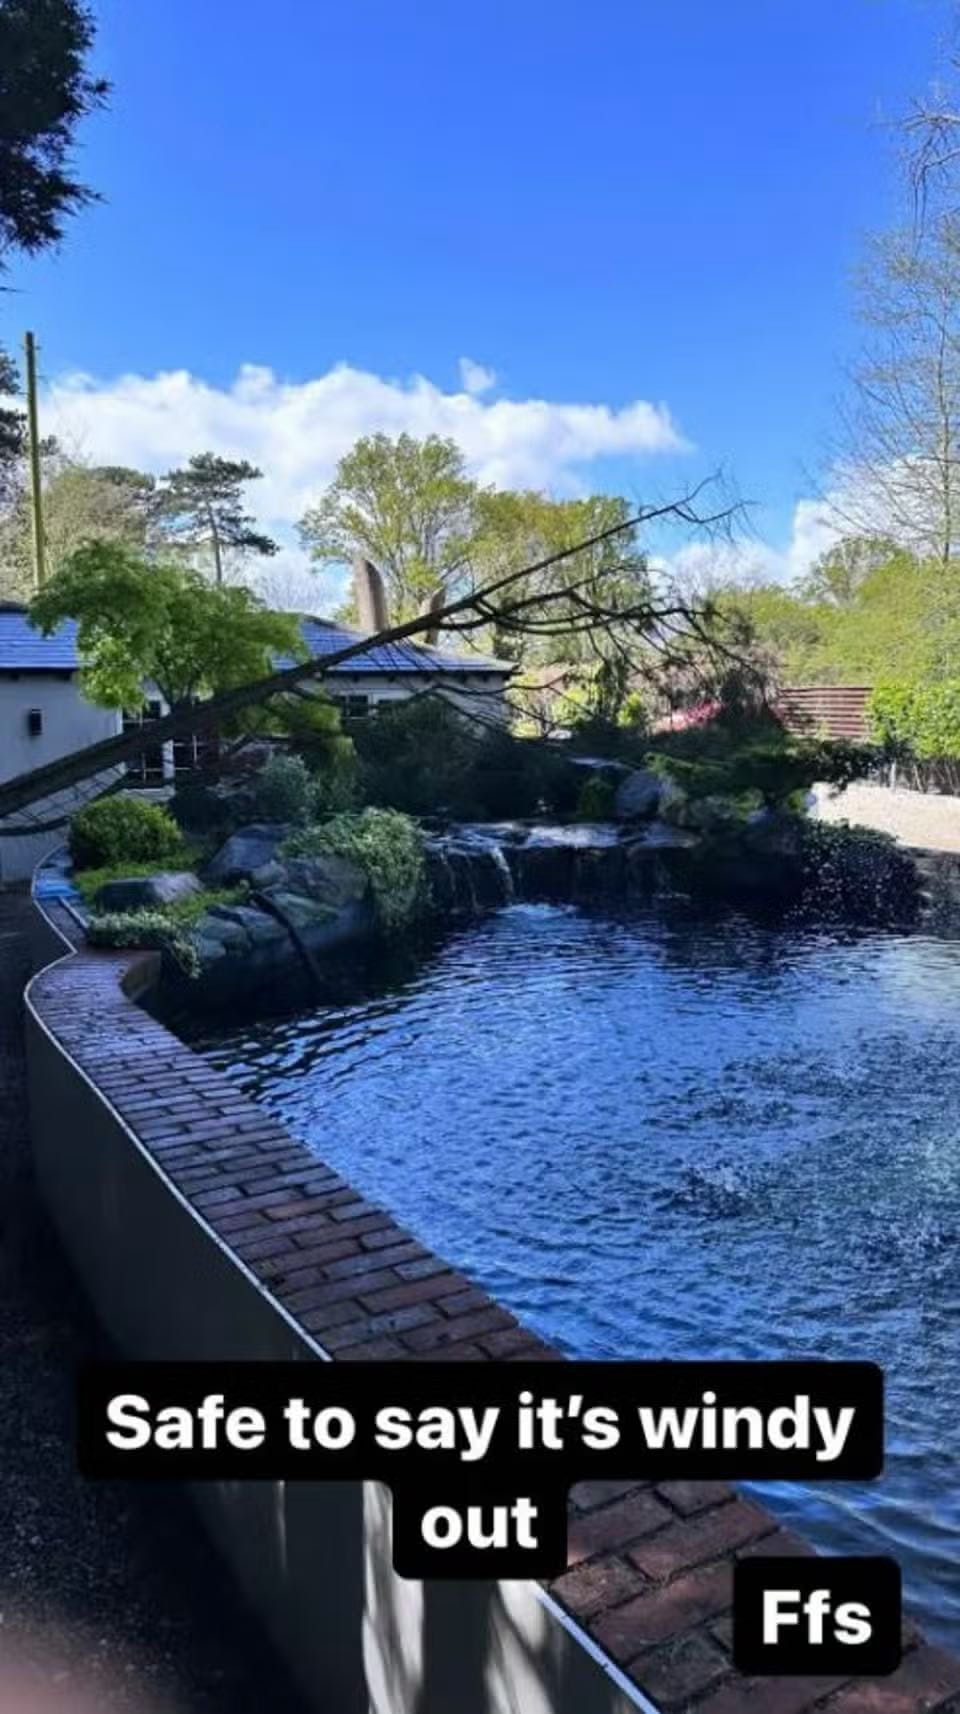 Rylan Clark Instagram picture of a tree fallen in a pond